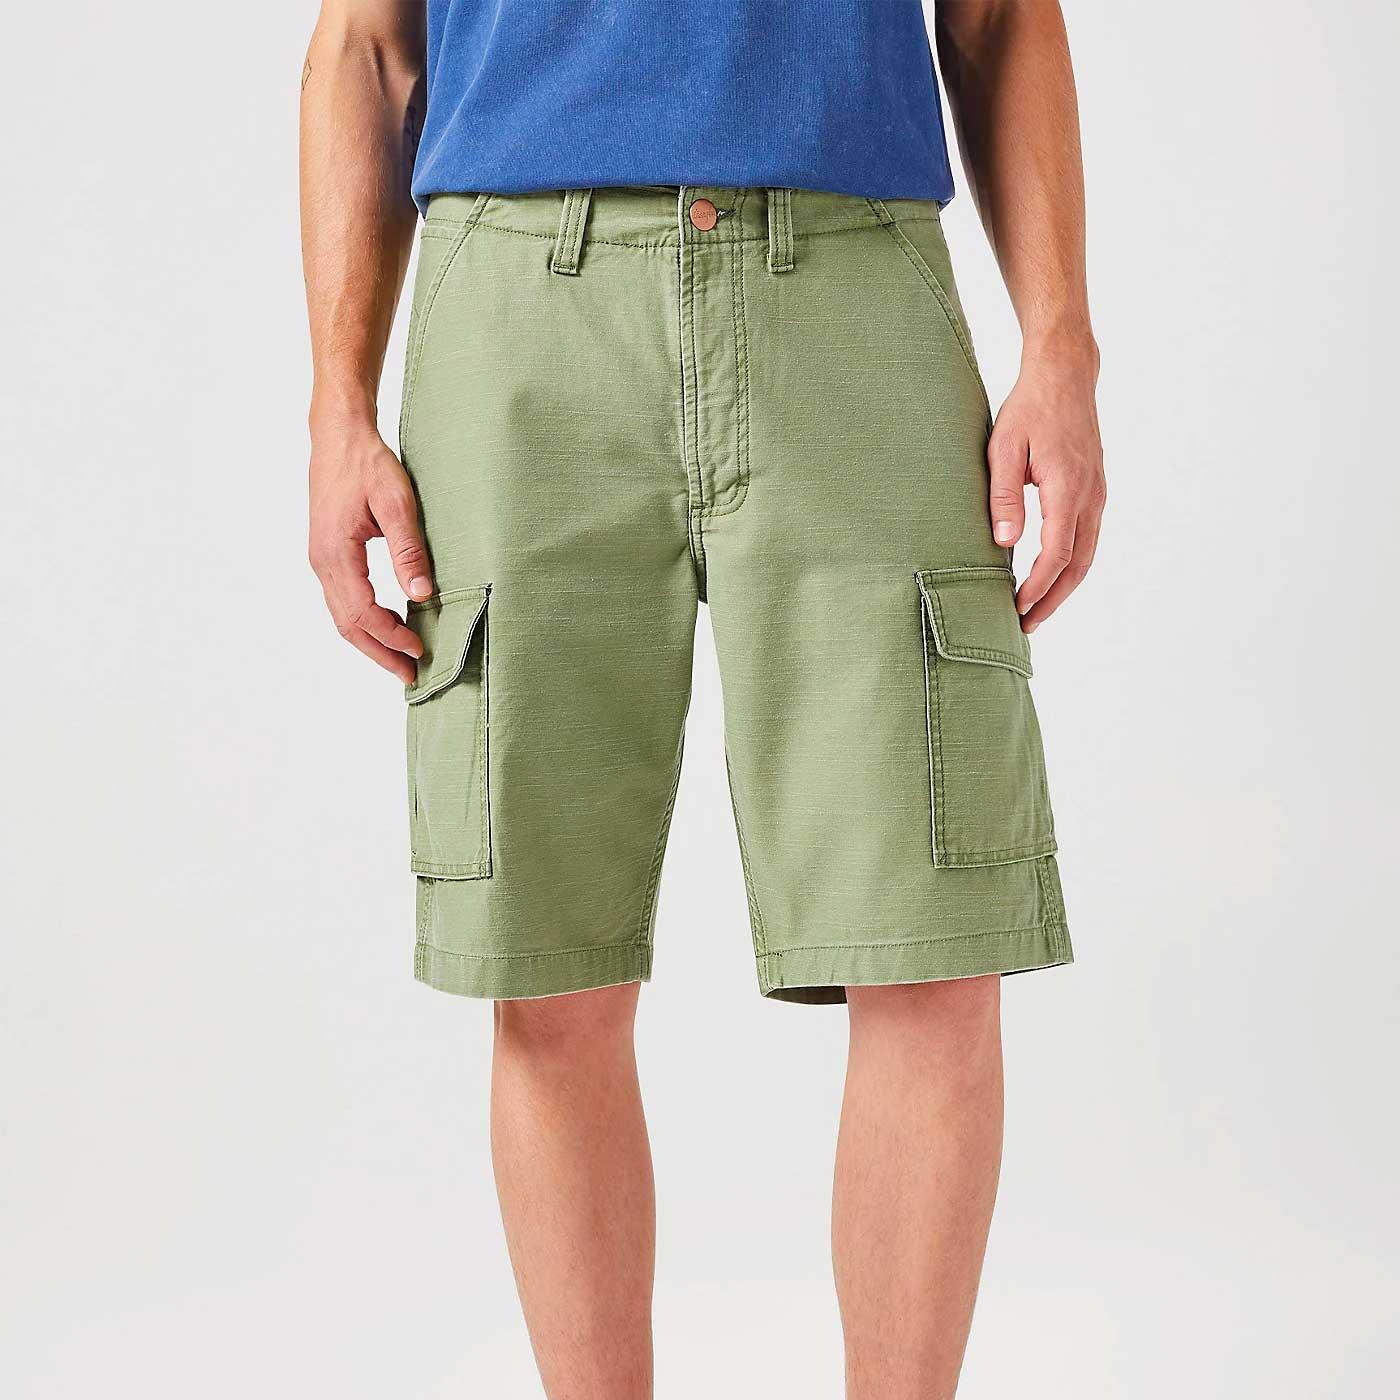 Casey Jones Wrangler Retro Cargo Shorts (Olive)